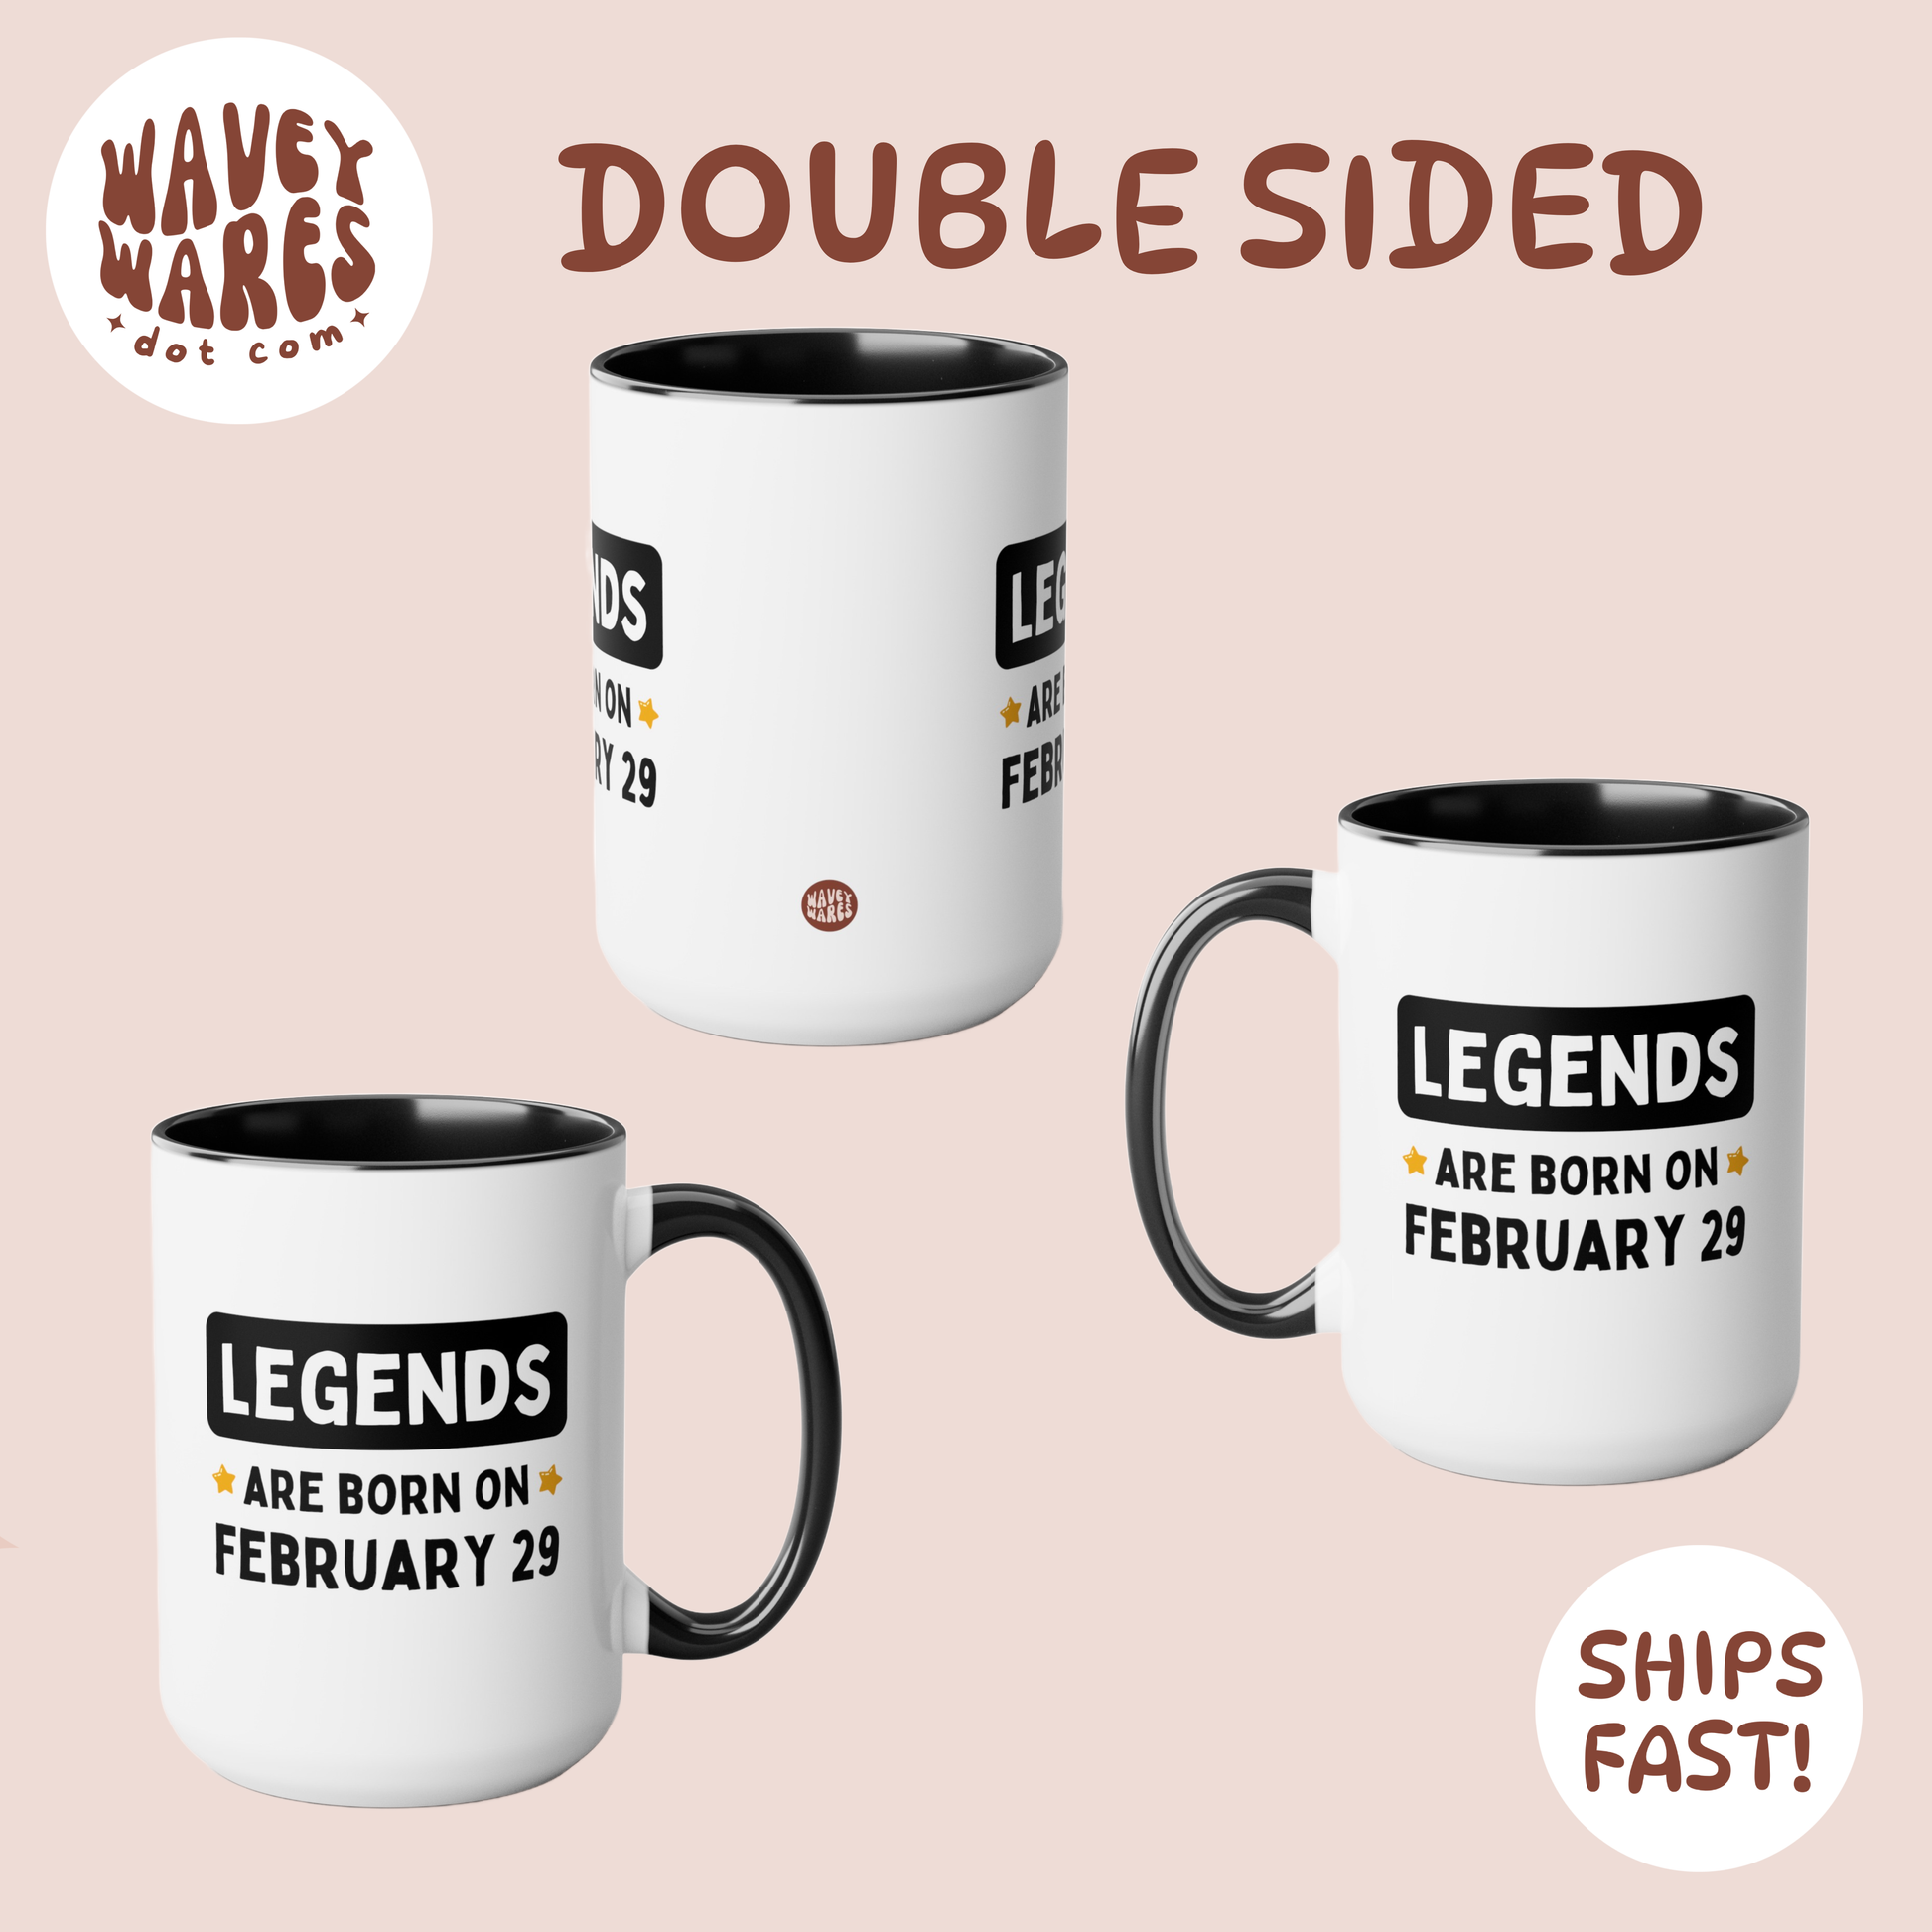 double sided background coffee mug waveywares wavey wares wavywares wavy wares